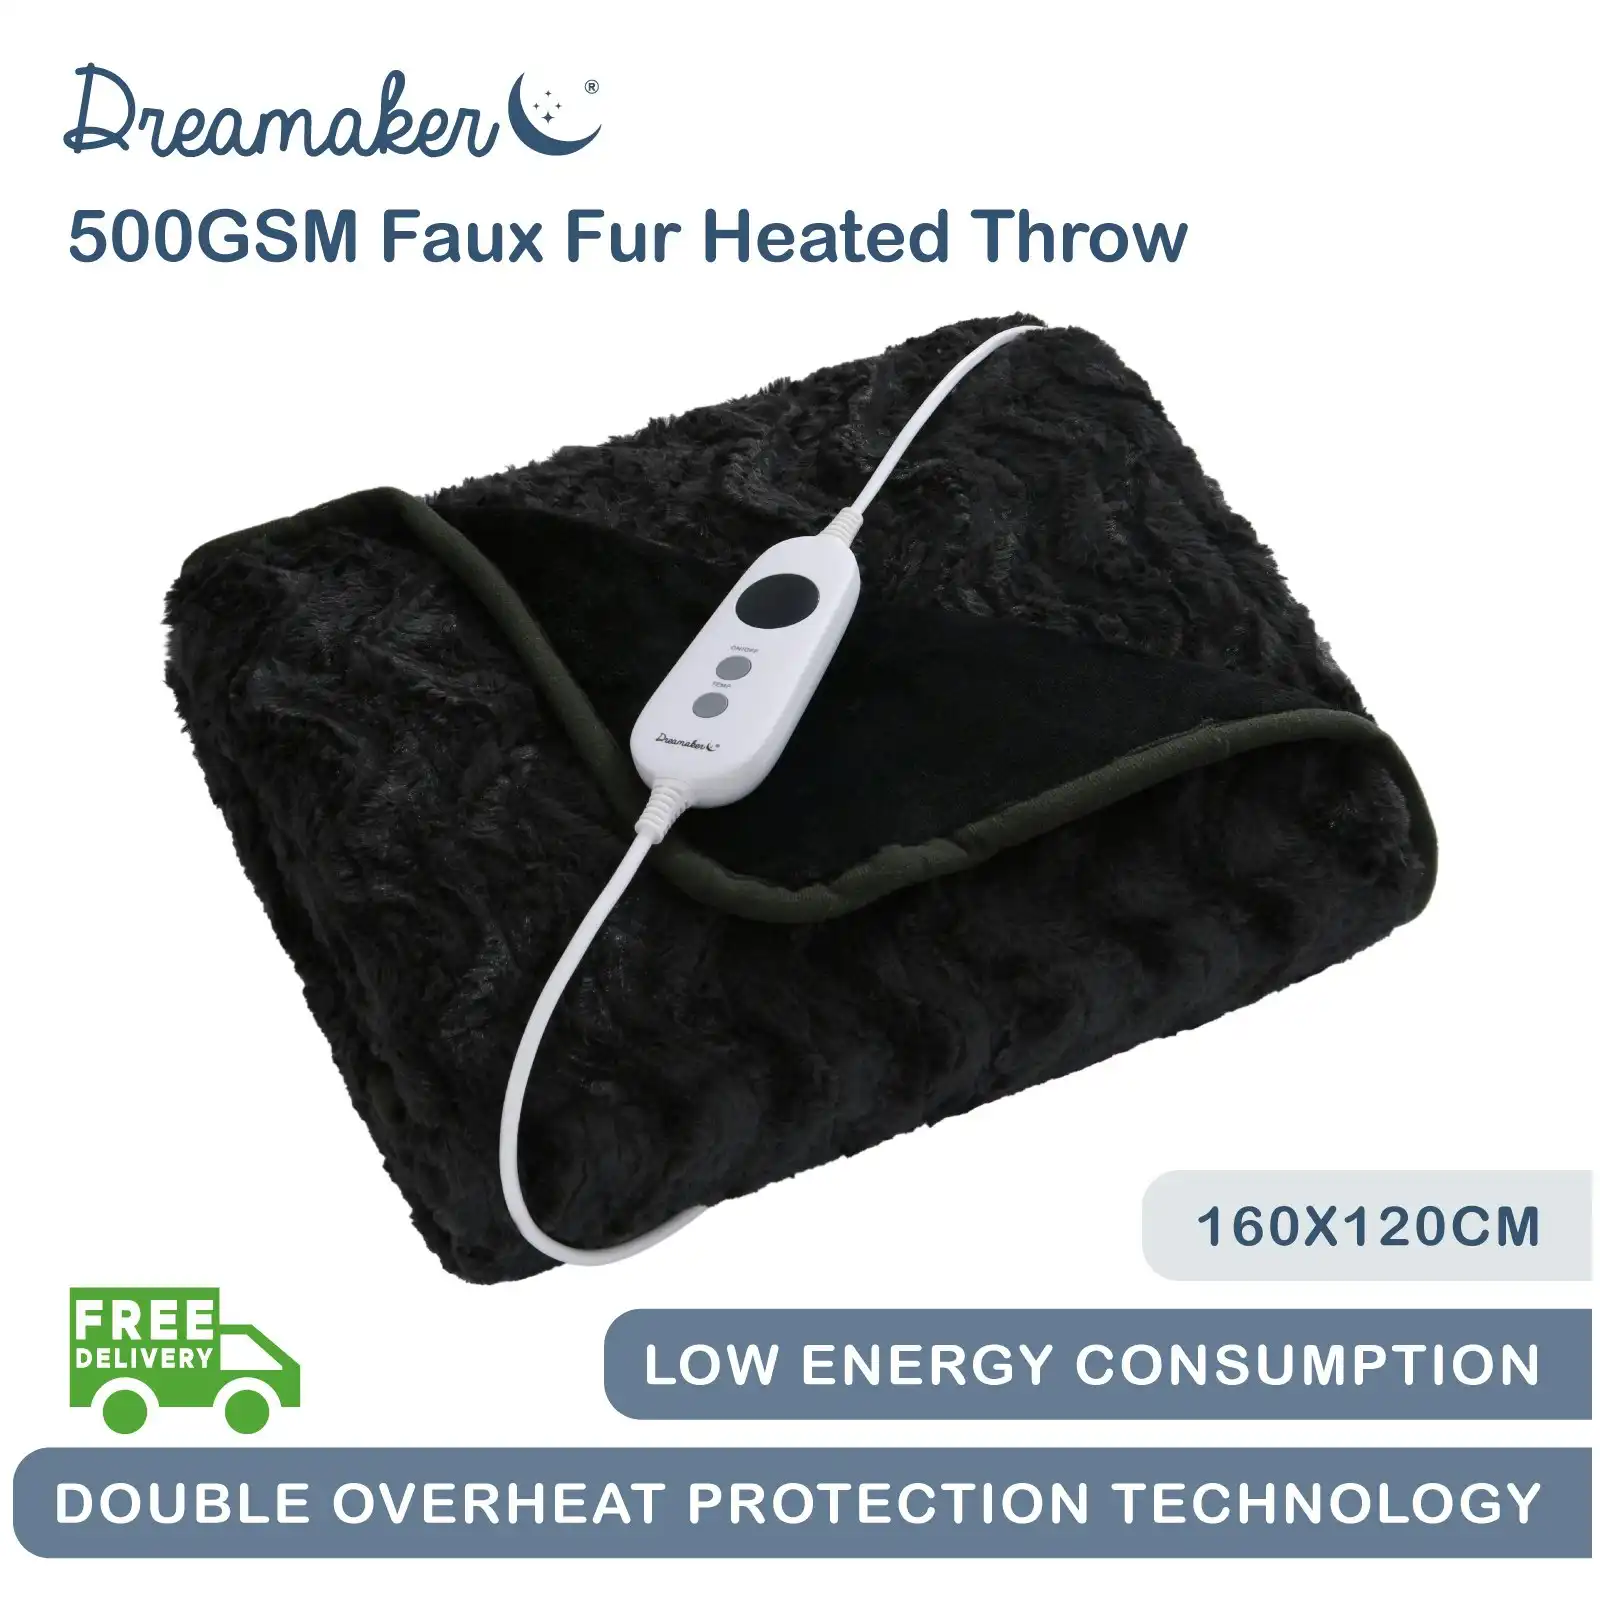 Dreamaker 500Gsm Faux Fur Heated Throw Charcoal - 160x120cm